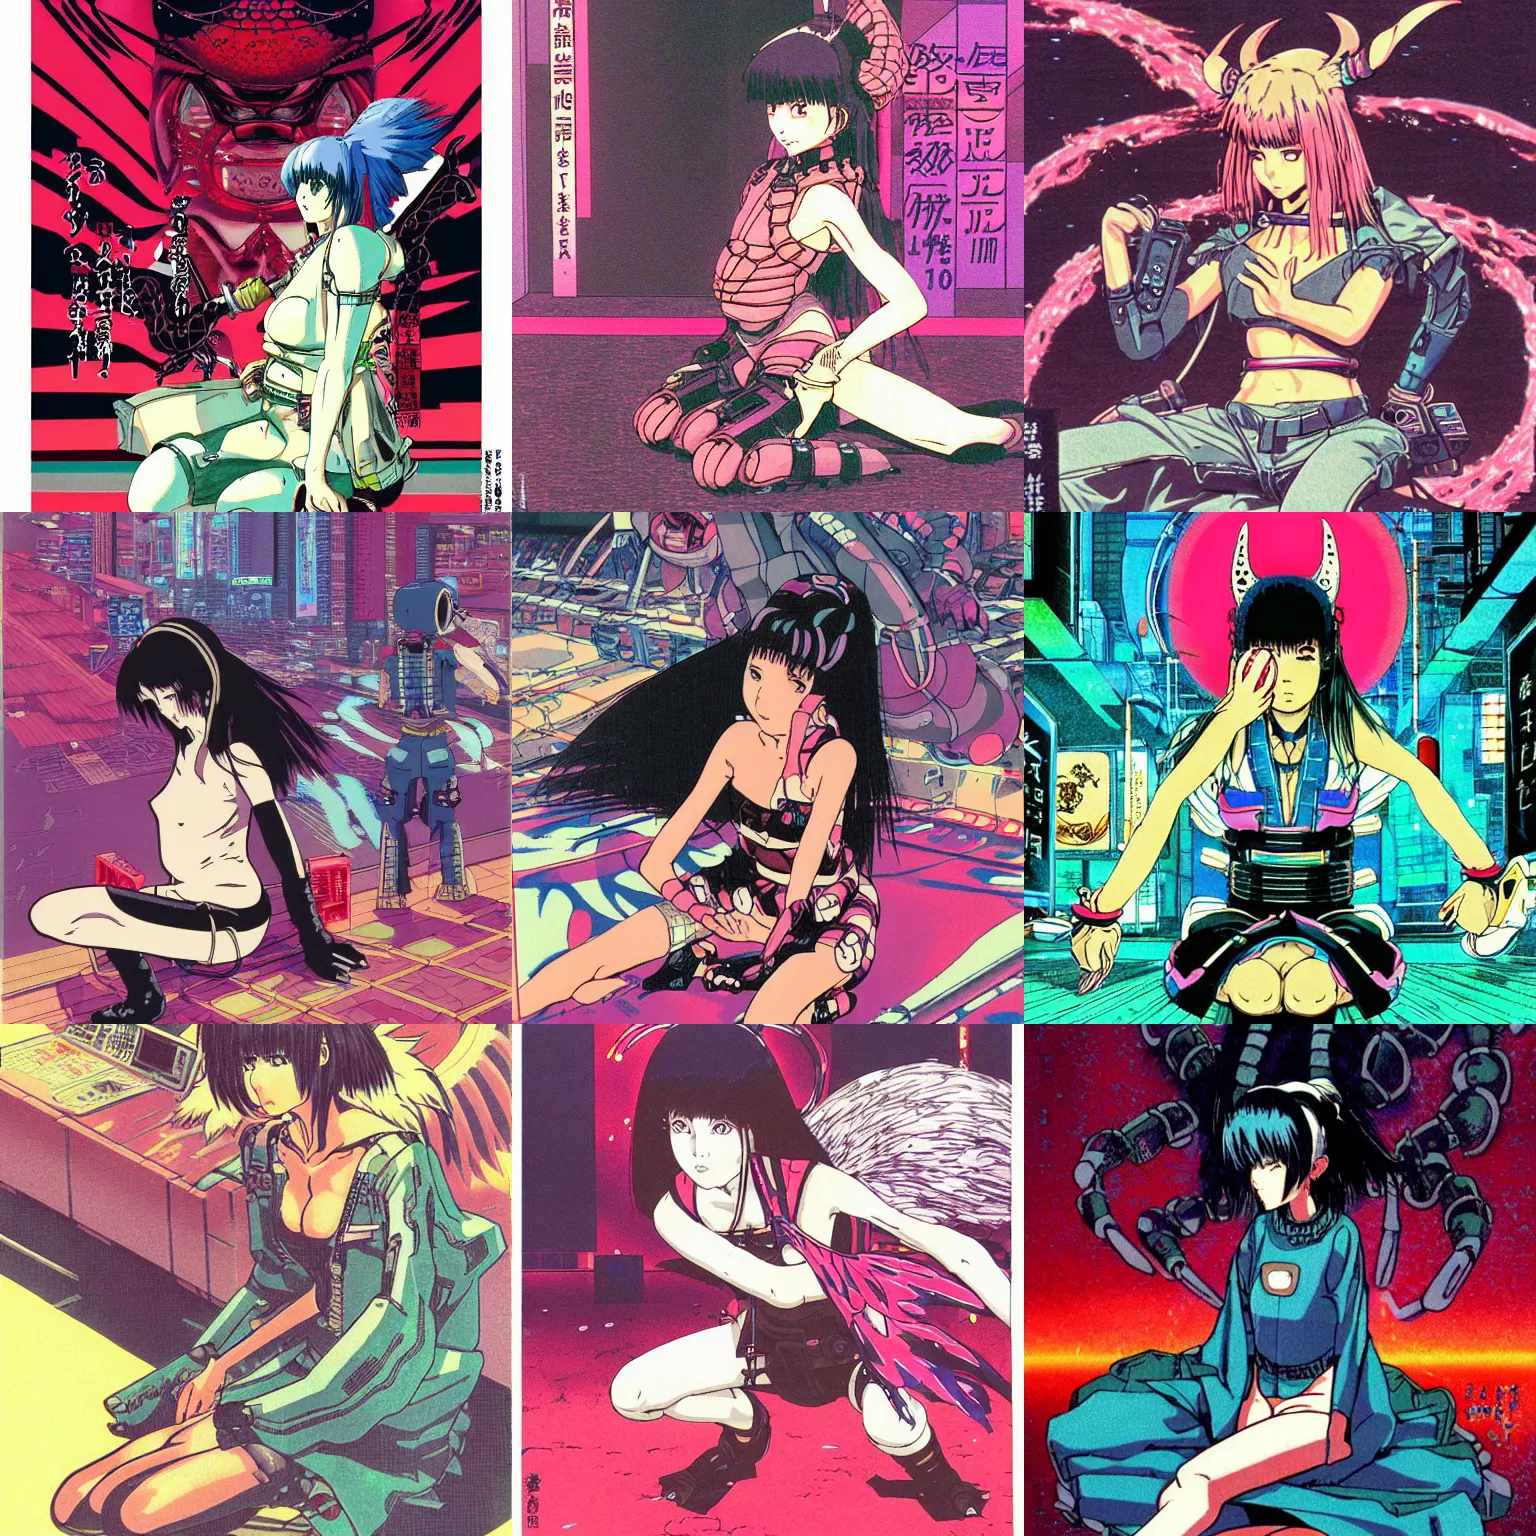 Prompt: an awe inspiring 1980s japanese cyberpunk anime style illustration of an demon girl seated on the floor by masamune shirow and katsuhiro otomo, studio ghibli color scheme, dark